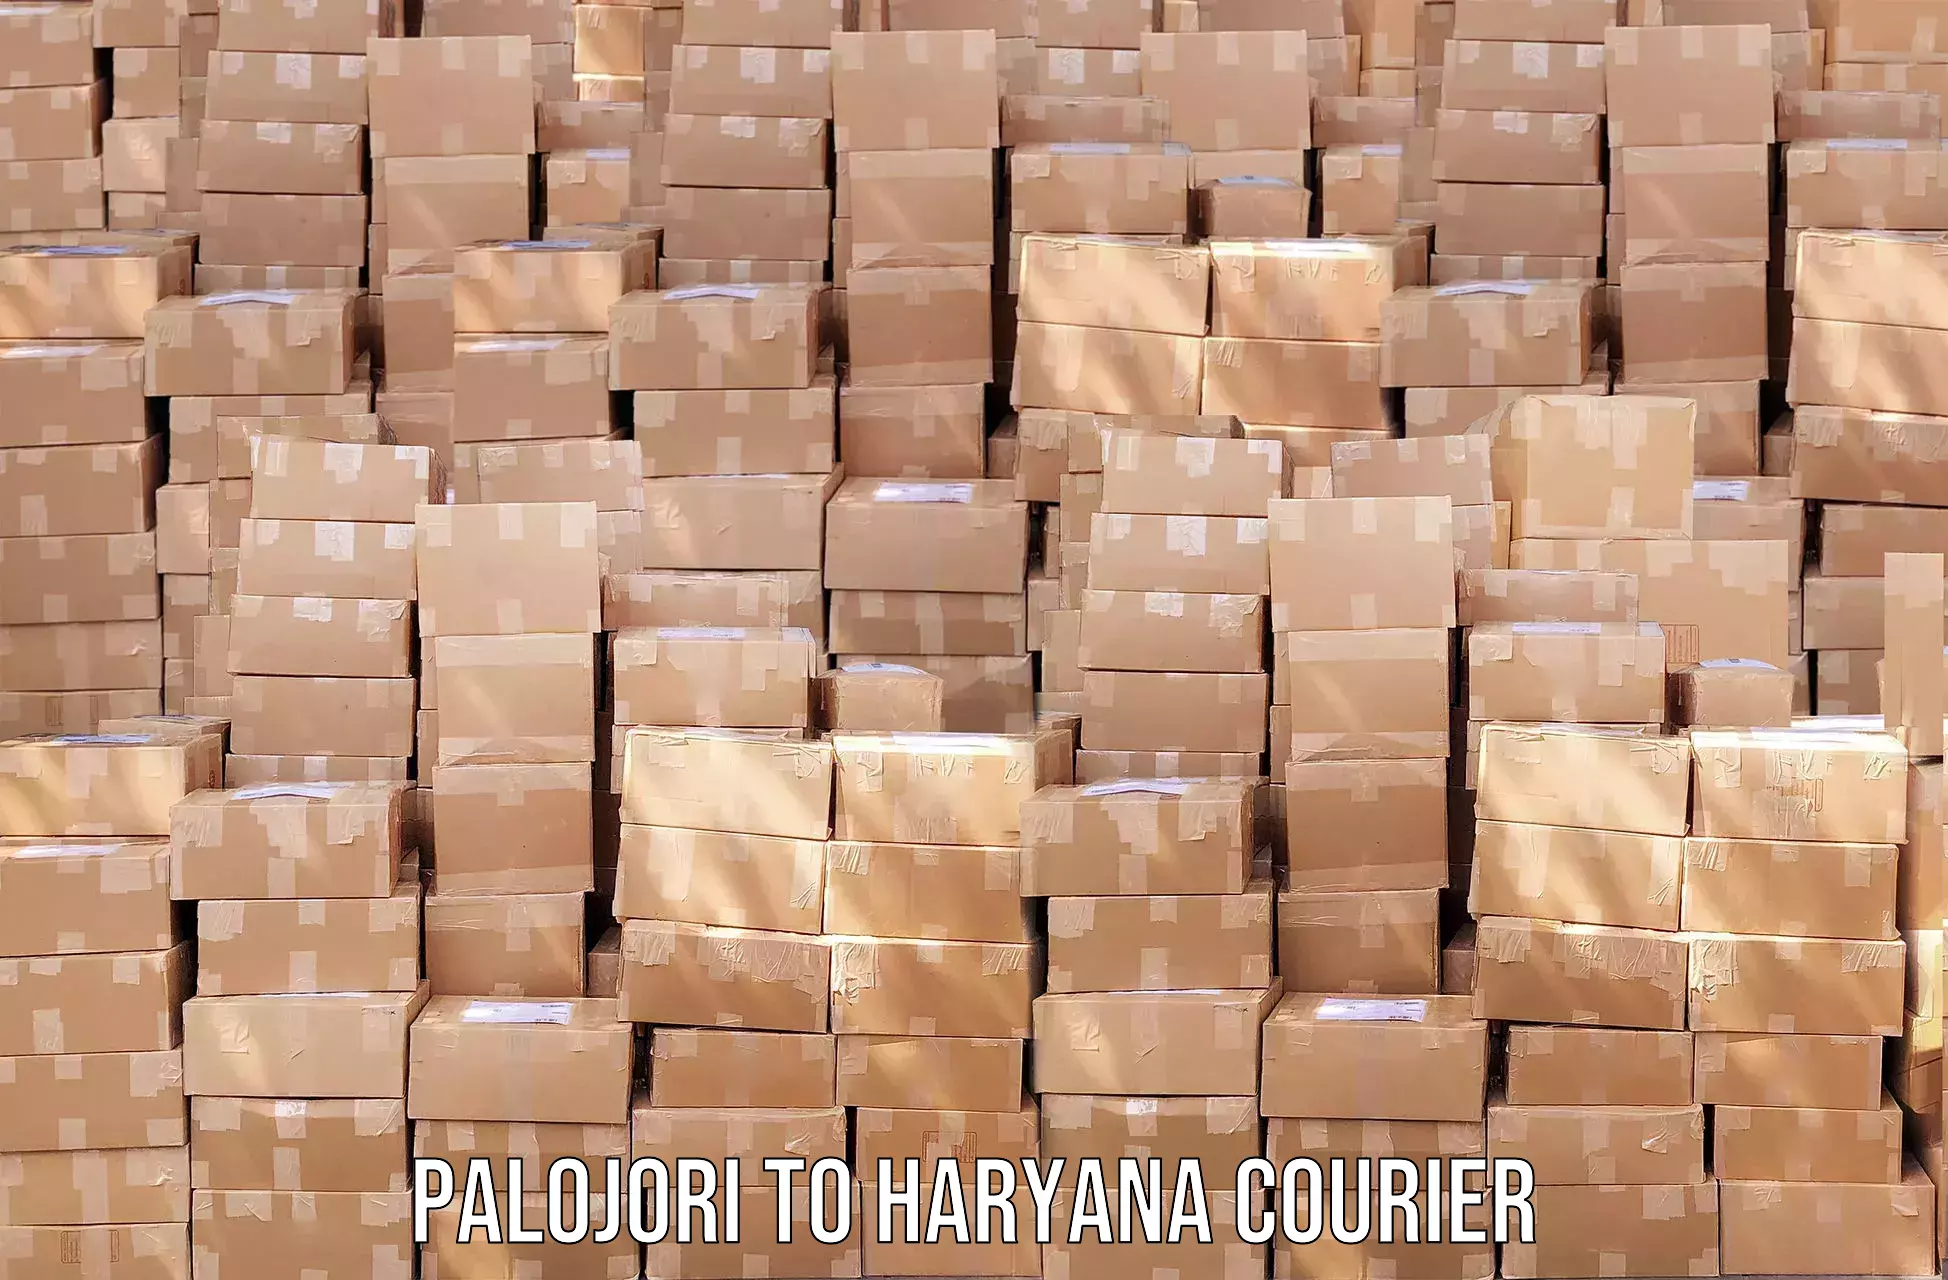 Courier rate comparison Palojori to Narwana